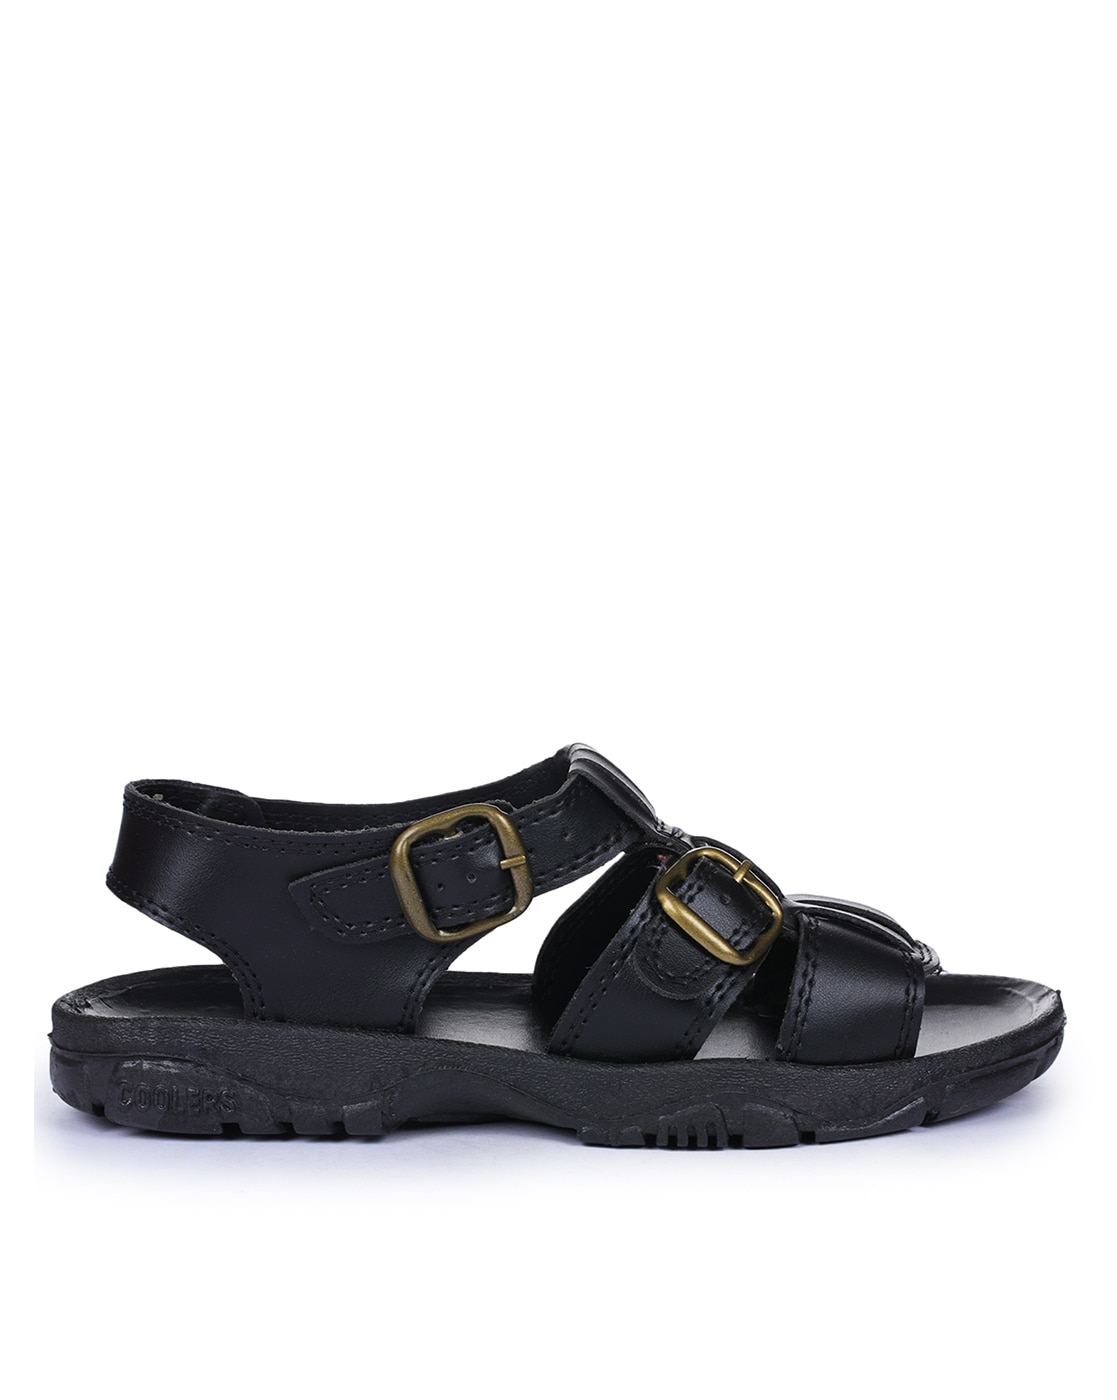 COOLERS BY LIBERTY 7153-44 Men Black Sandals - Buy COOLERS BY LIBERTY  7153-44 Men Black Sandals Online at Best Price - Shop Online for Footwears  in India | Flipkart.com